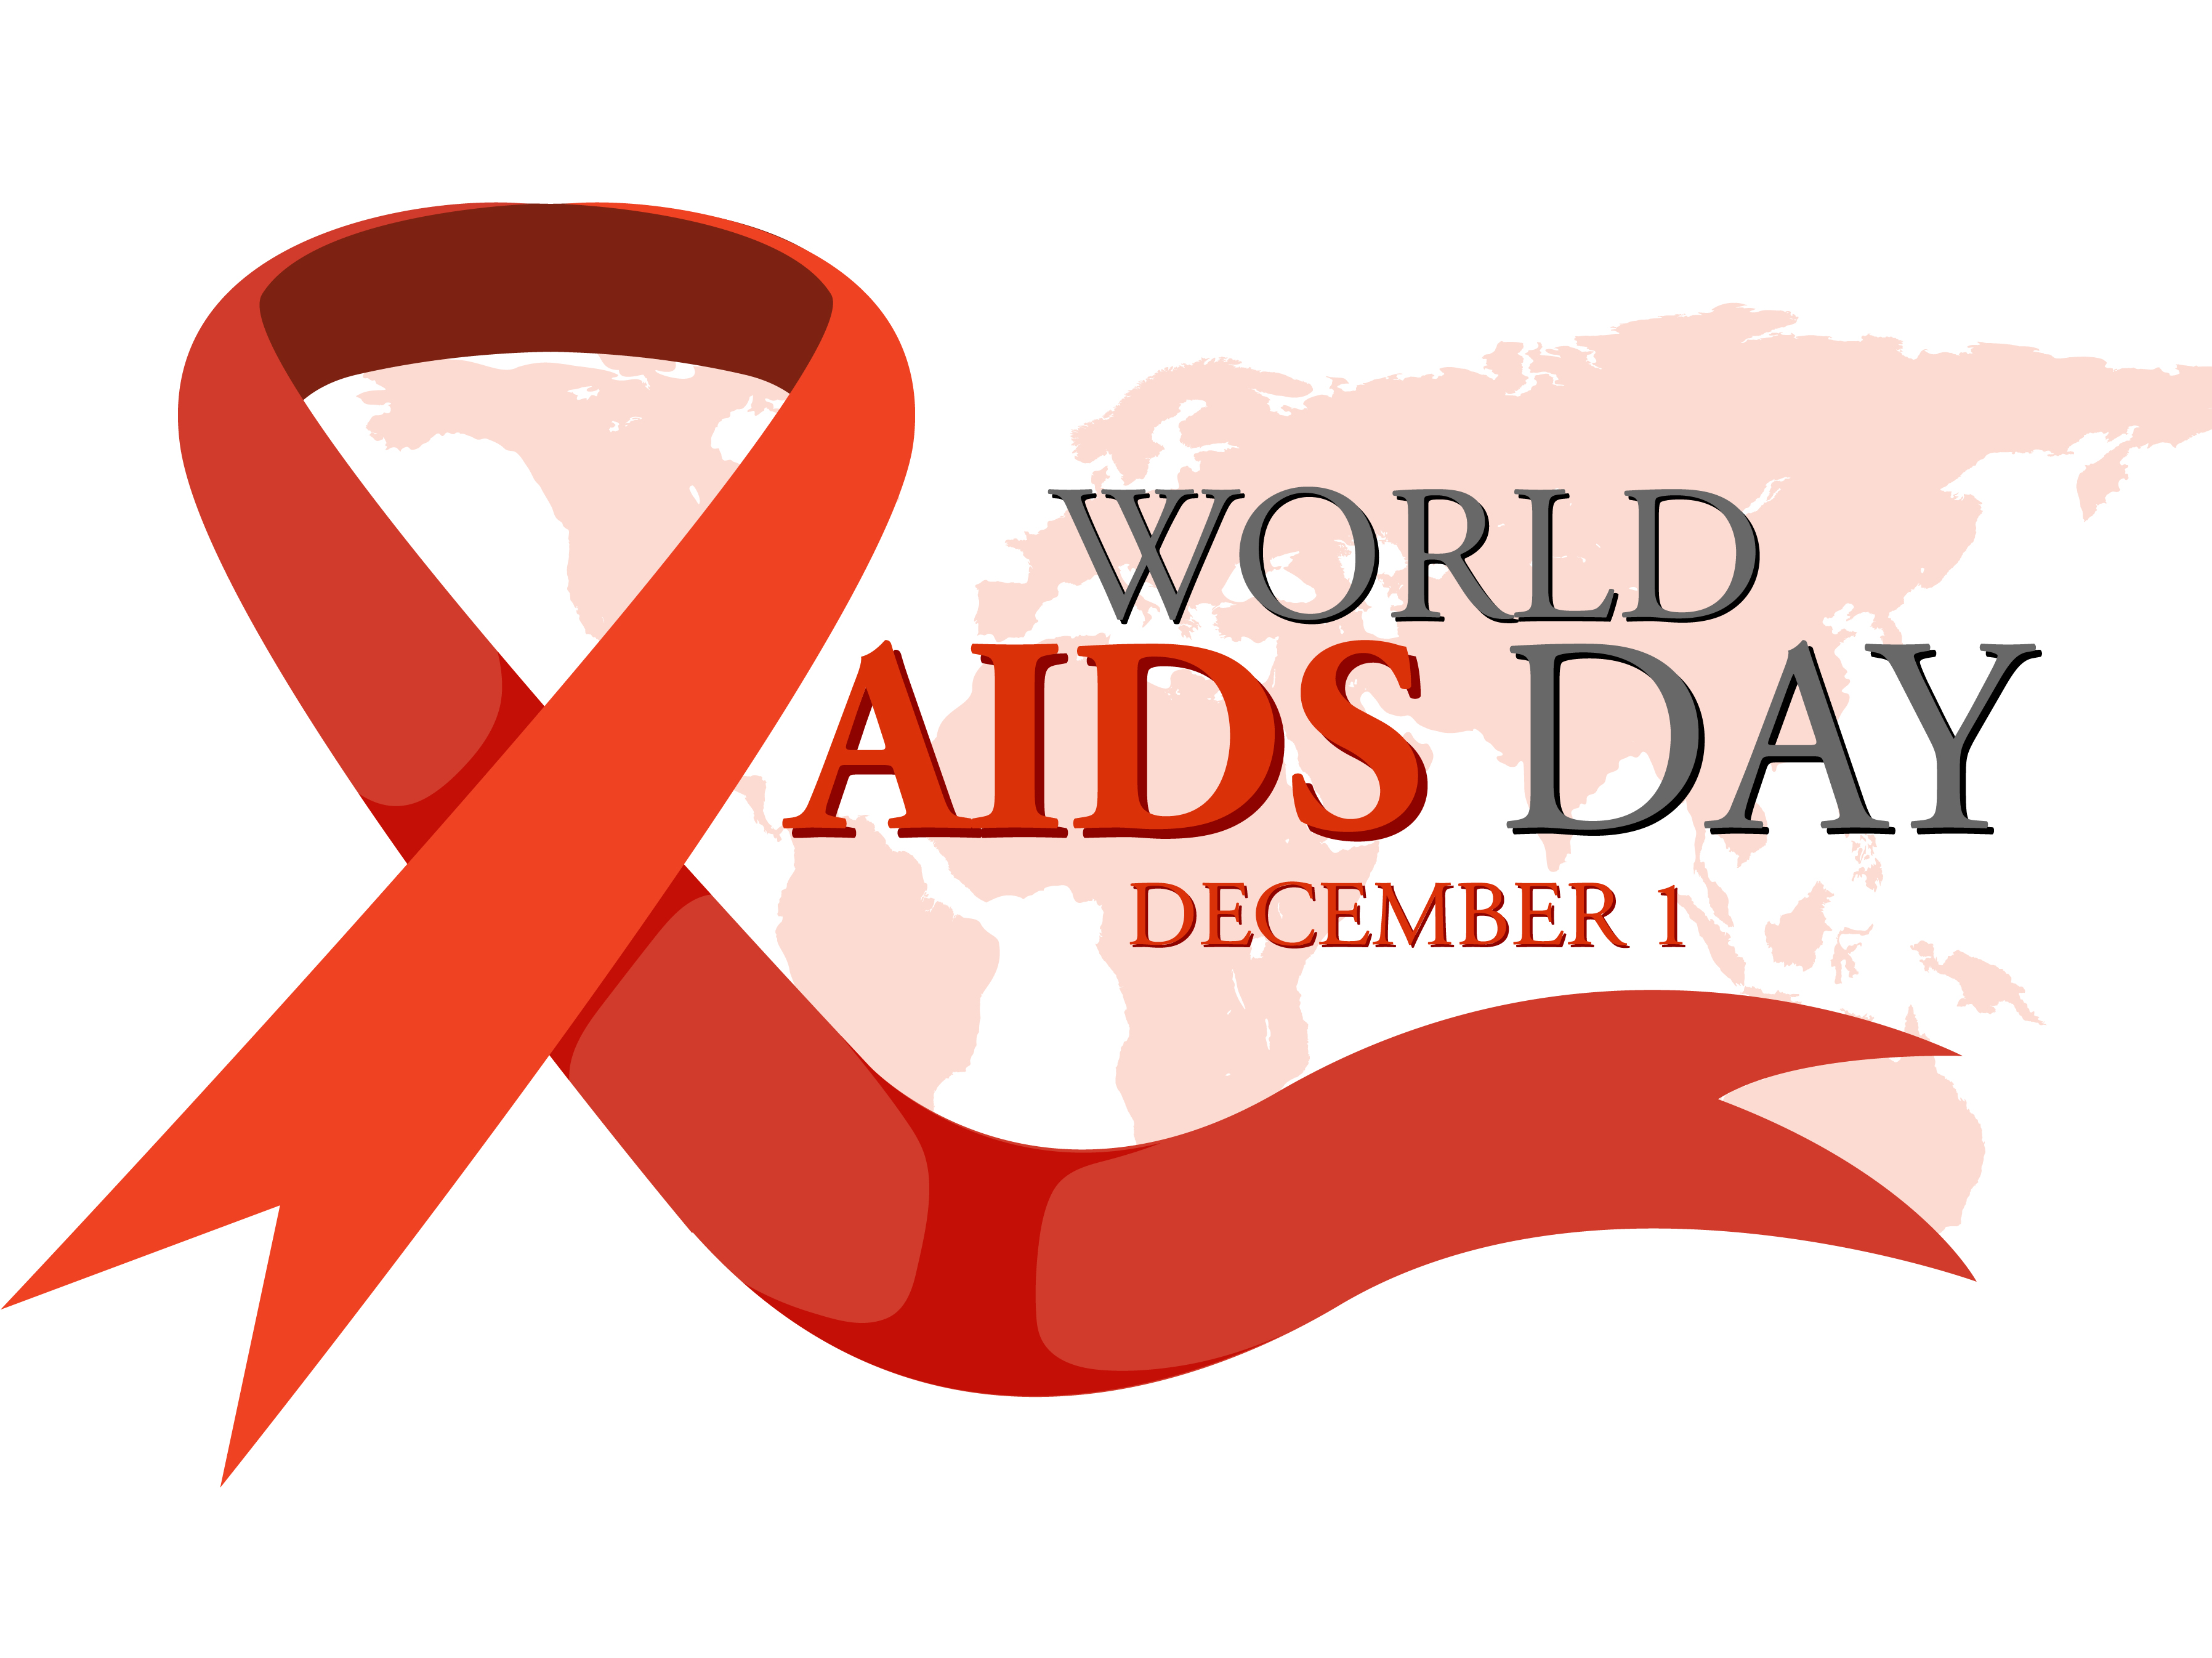 “समुदायांना नेतृत्व करू द्या” या संकल्पनेखाली आज जागतिक एड्स दिन